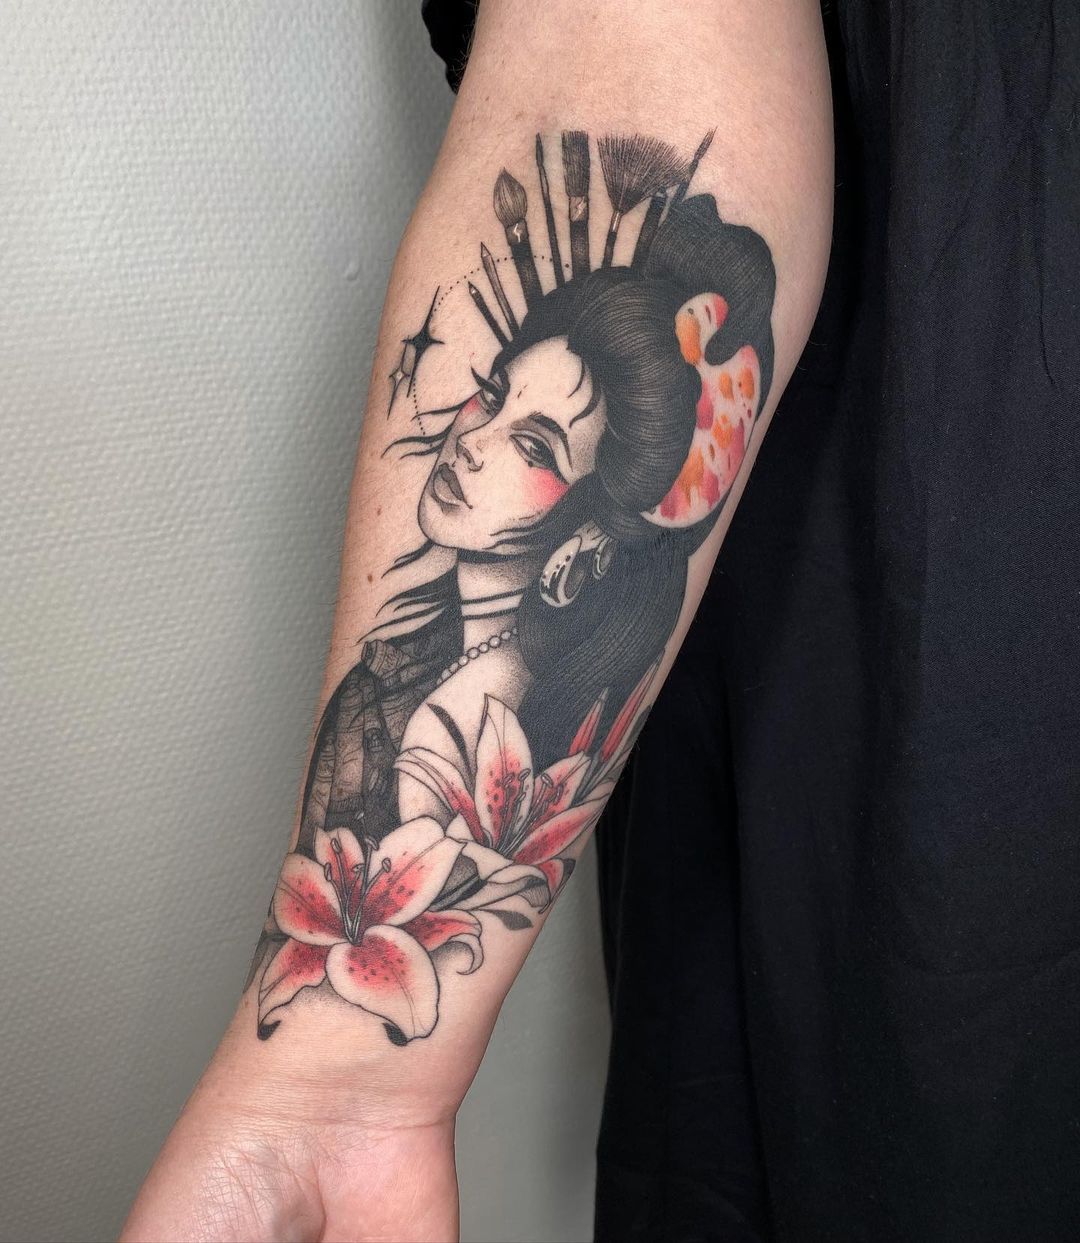 21 Amazing Geisha Tattoo Designs with Meanings - Body Art Guru